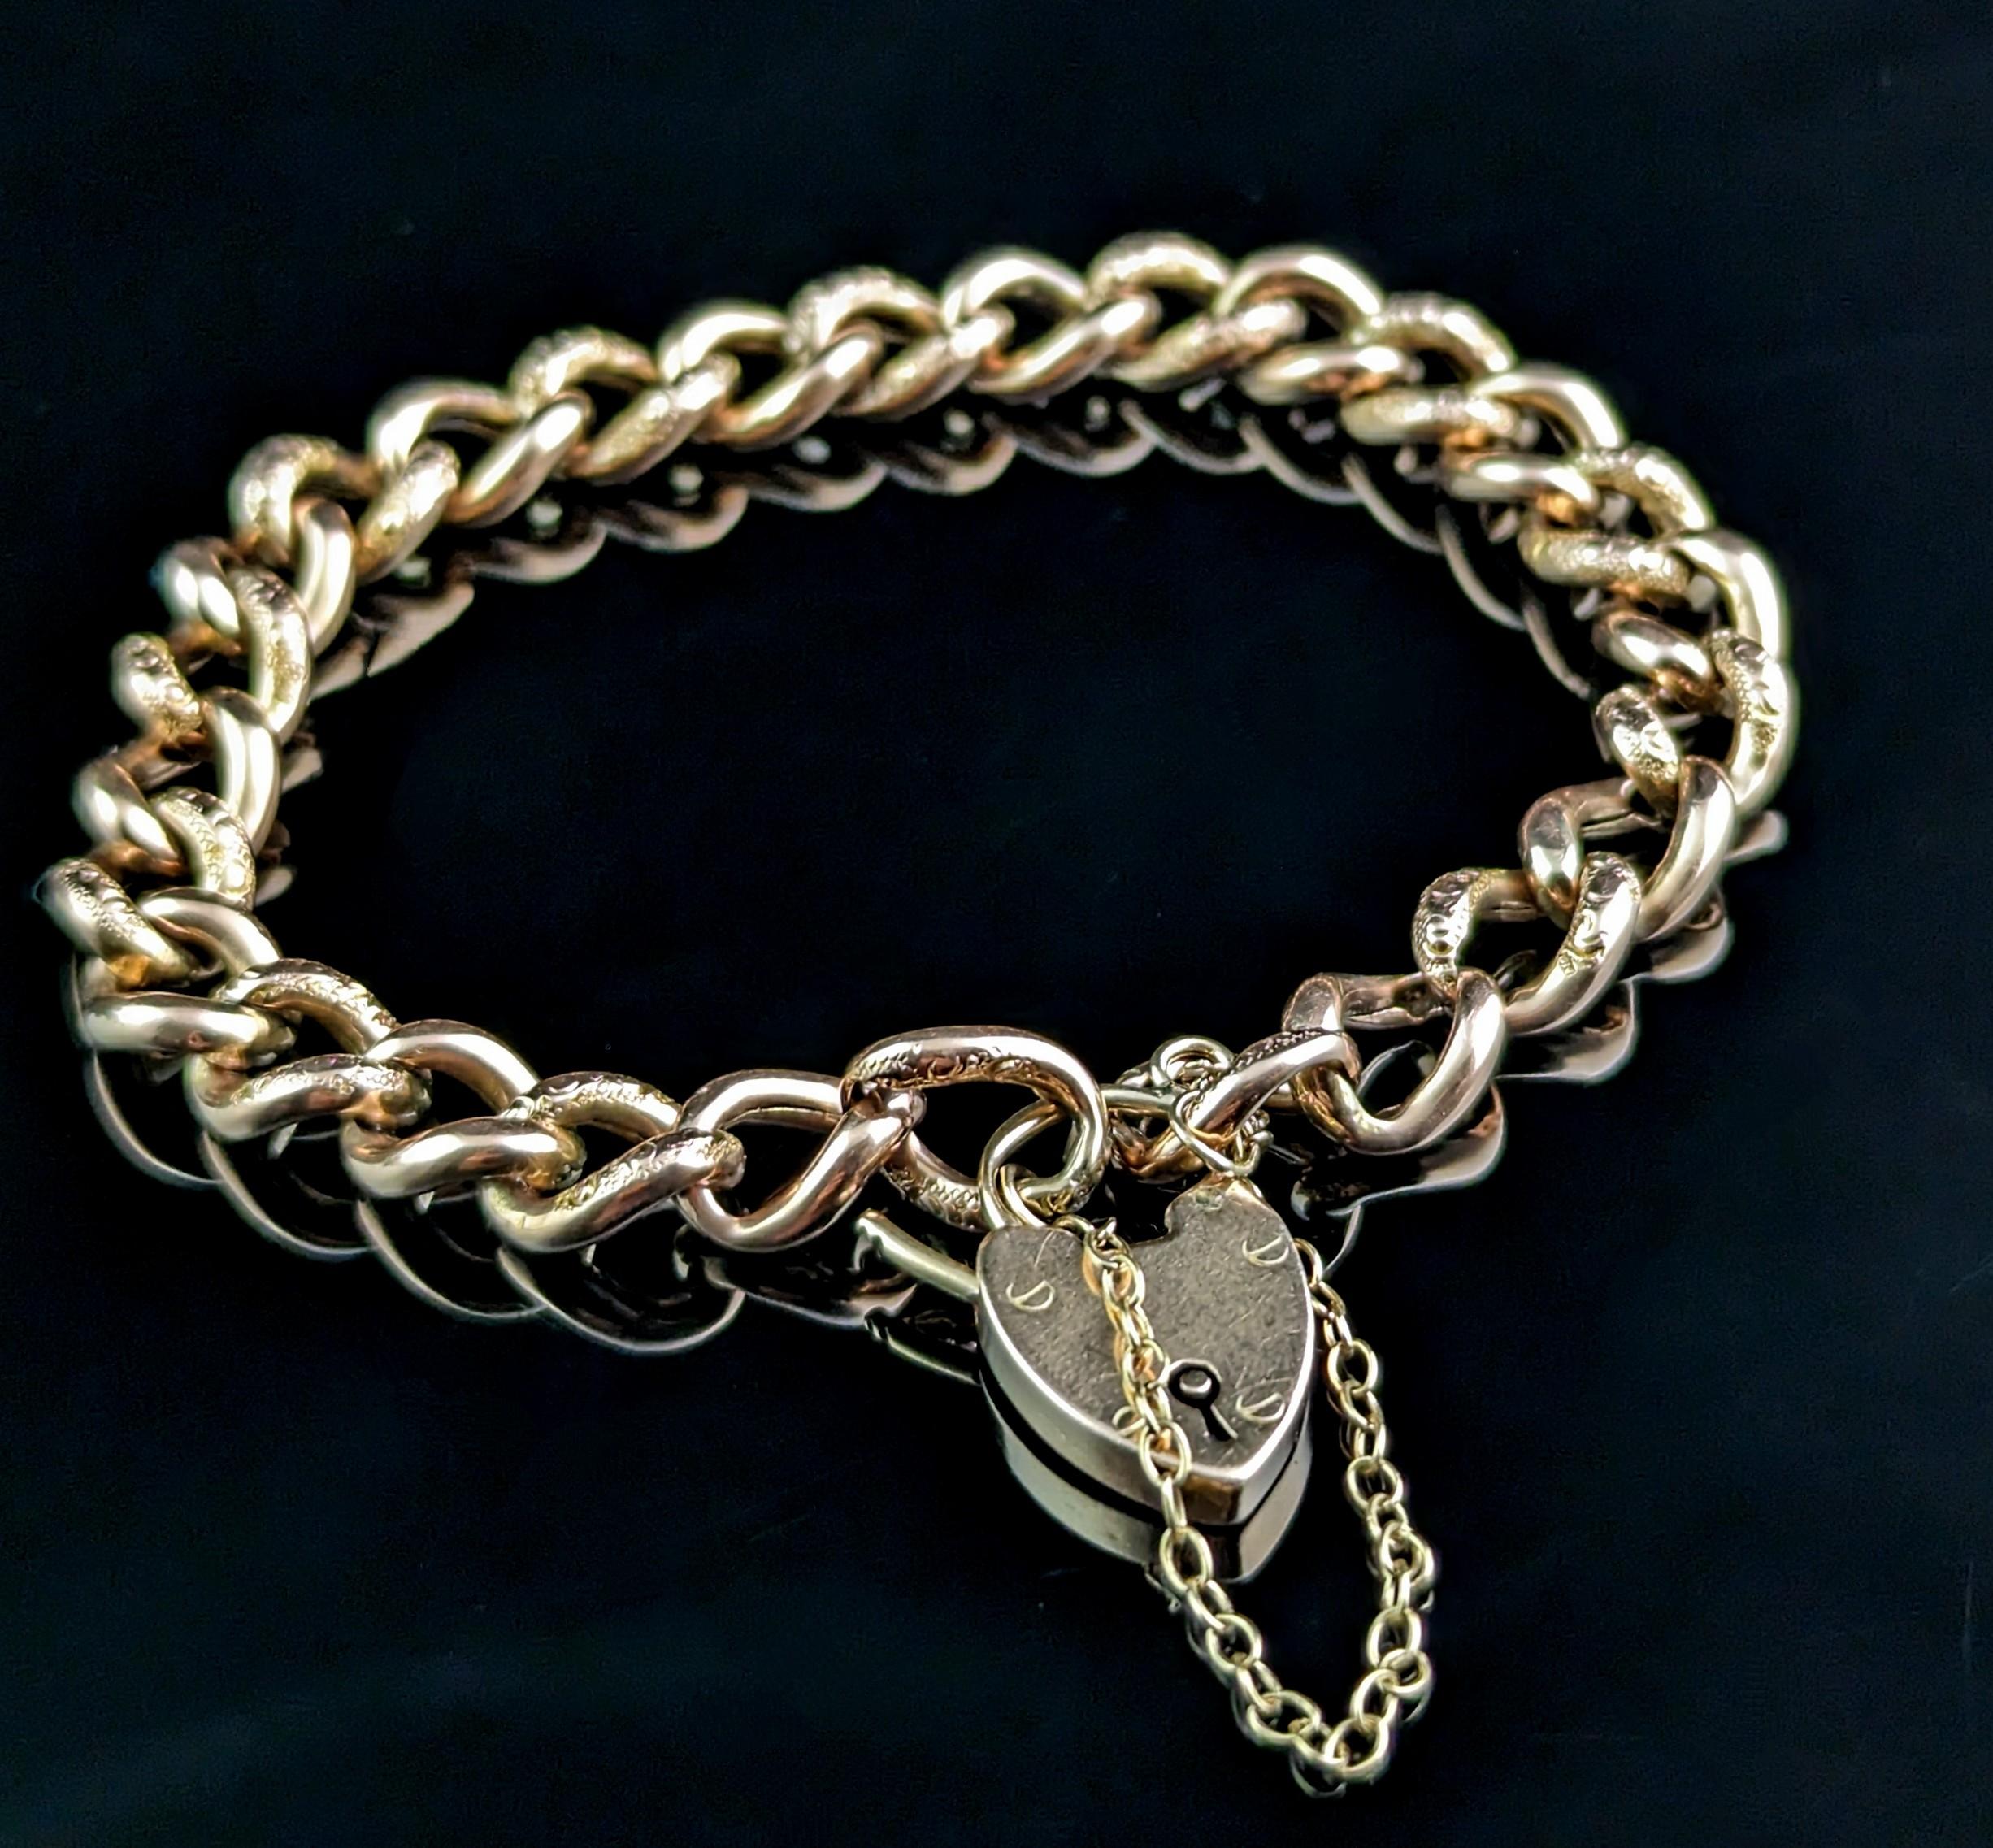 Women's Antique 9k Gold Curb Link Bracelet, Edwardian, Day to Night